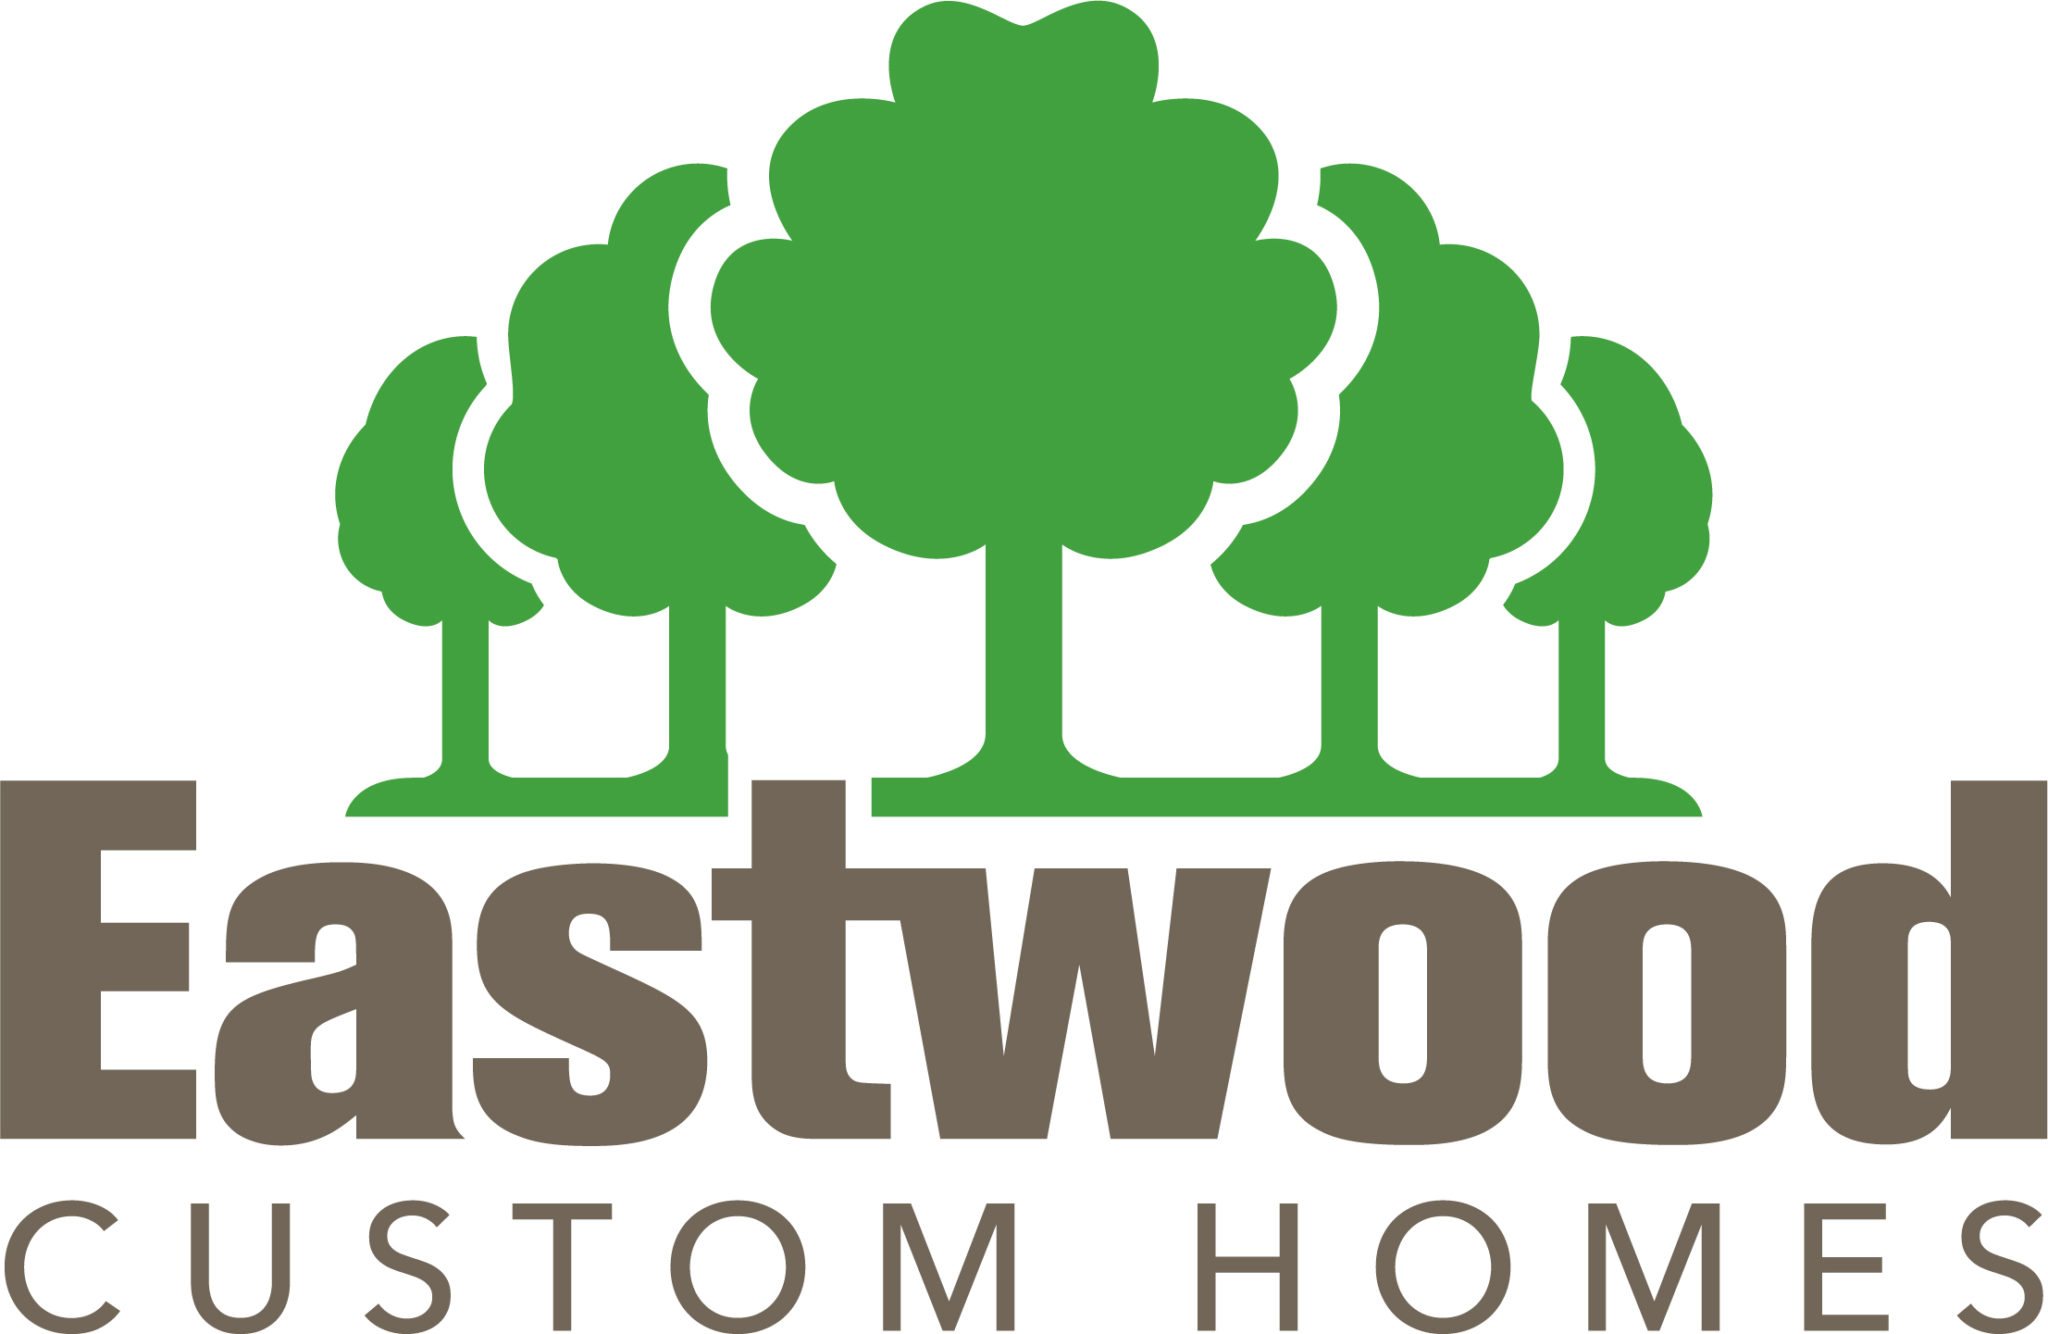 Eastwood Custom Homes